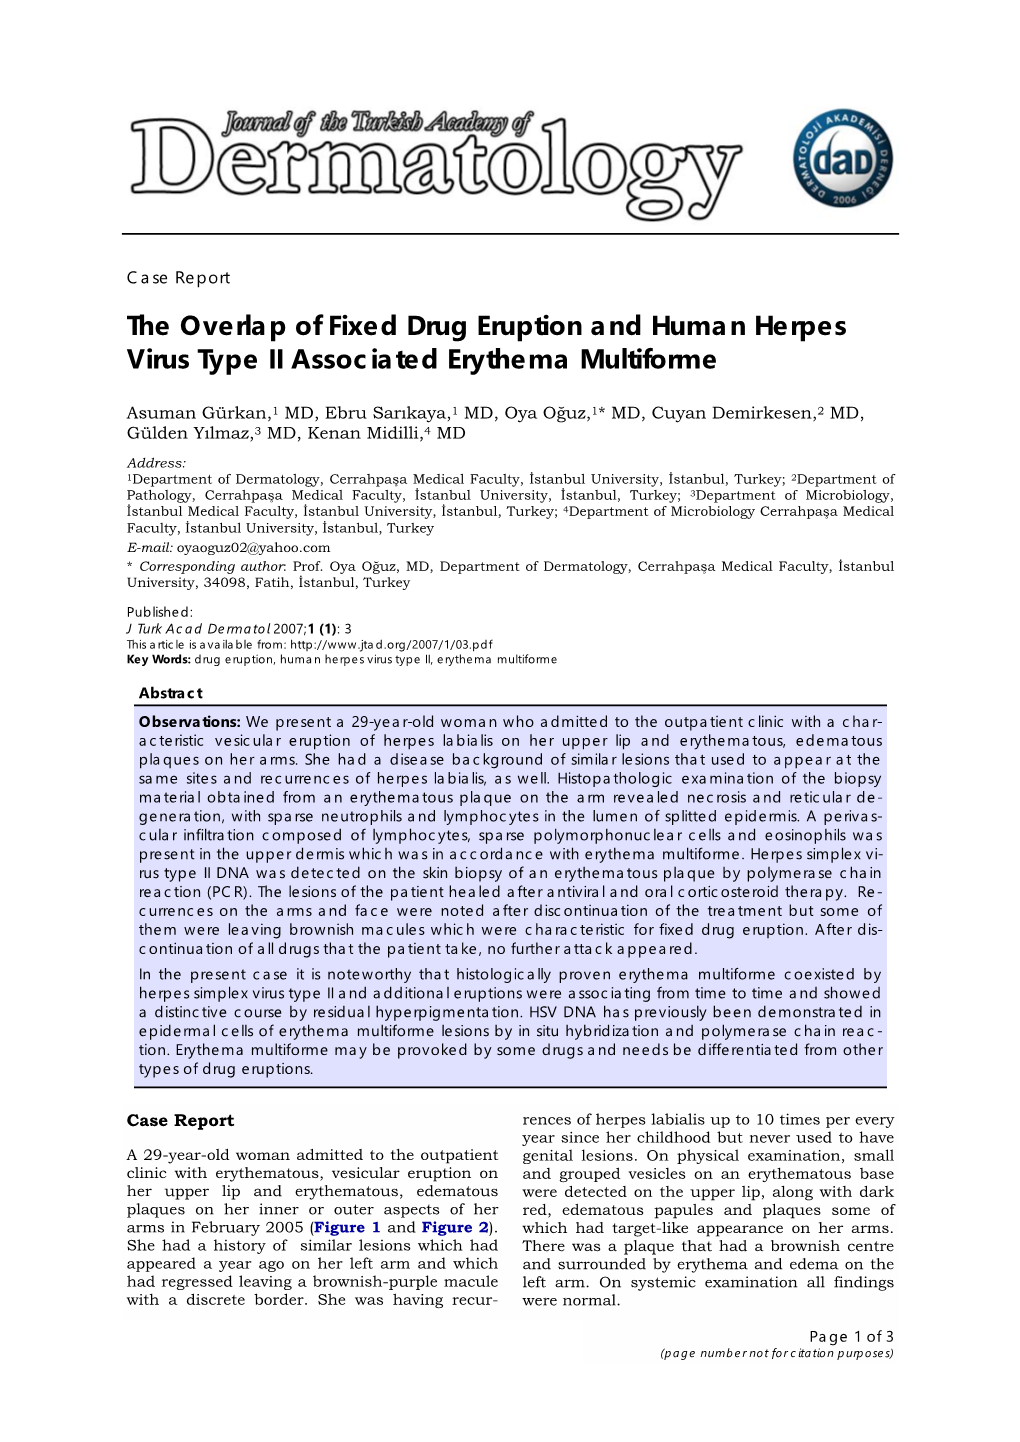 The Overlap of Fixed Drug Eruption and Human Herpes Virus Type II Associated Erythema Multiforme